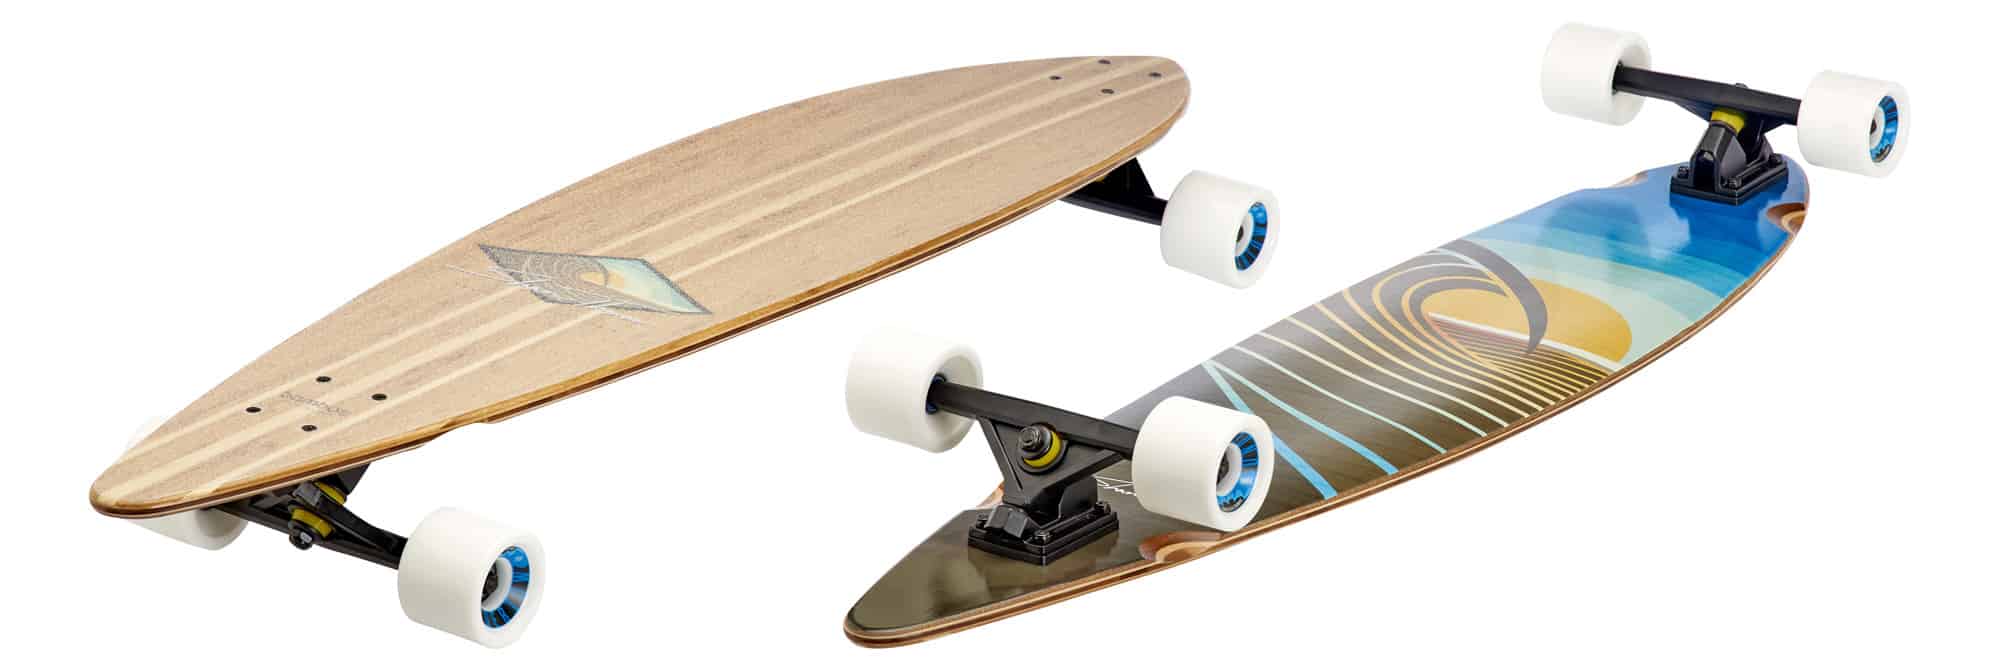 pintail longboard skateboard, pintail deck, skateboard art